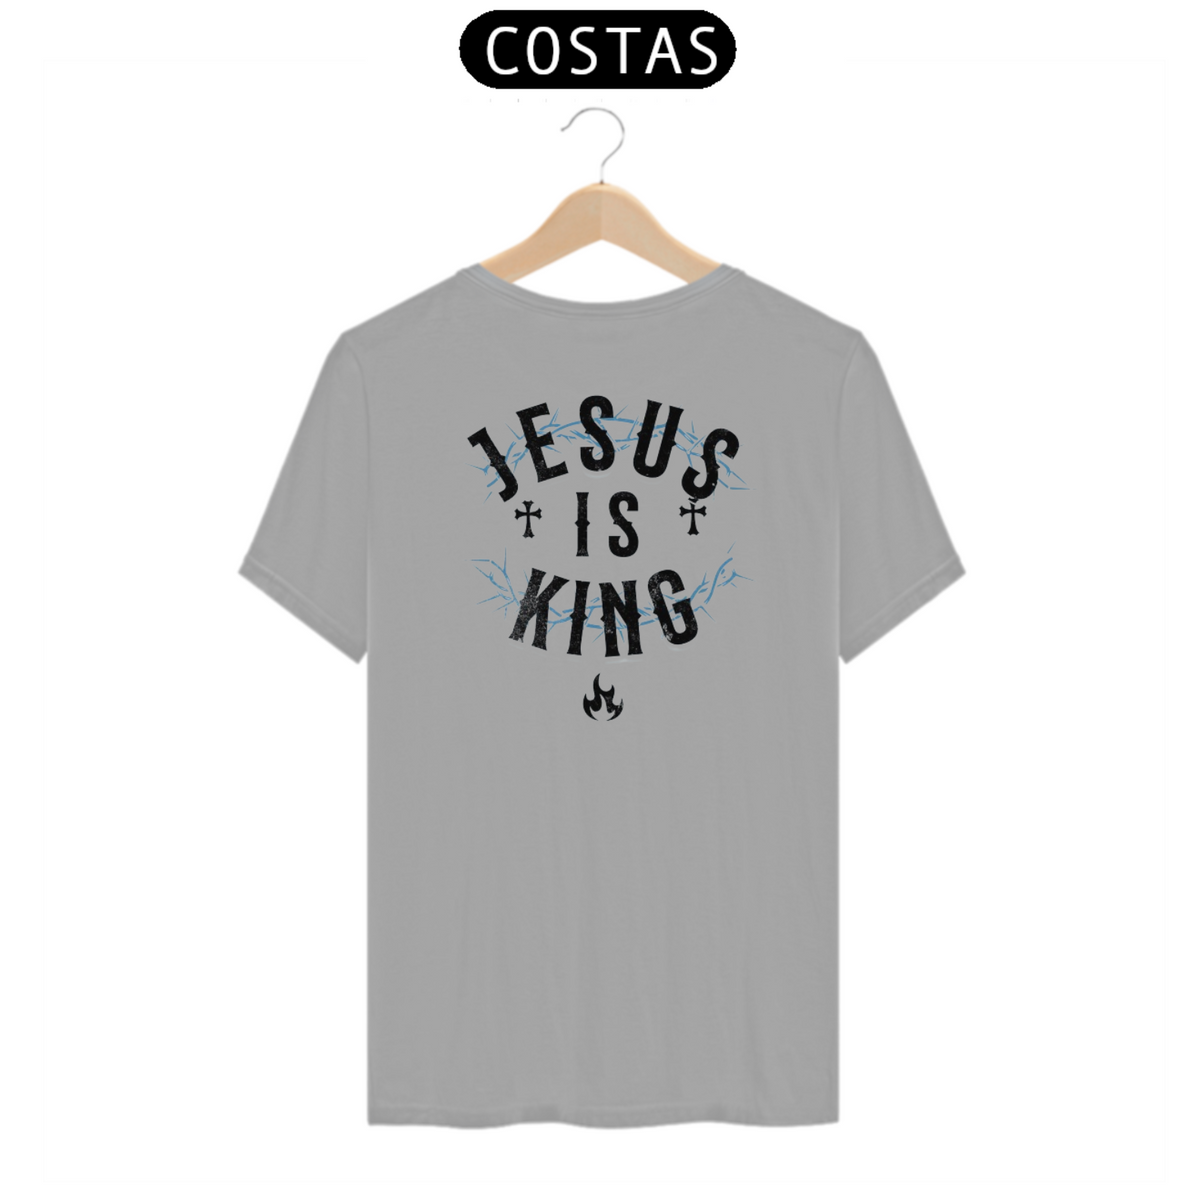 Nome do produto: JESUS IS KING T-shirt 